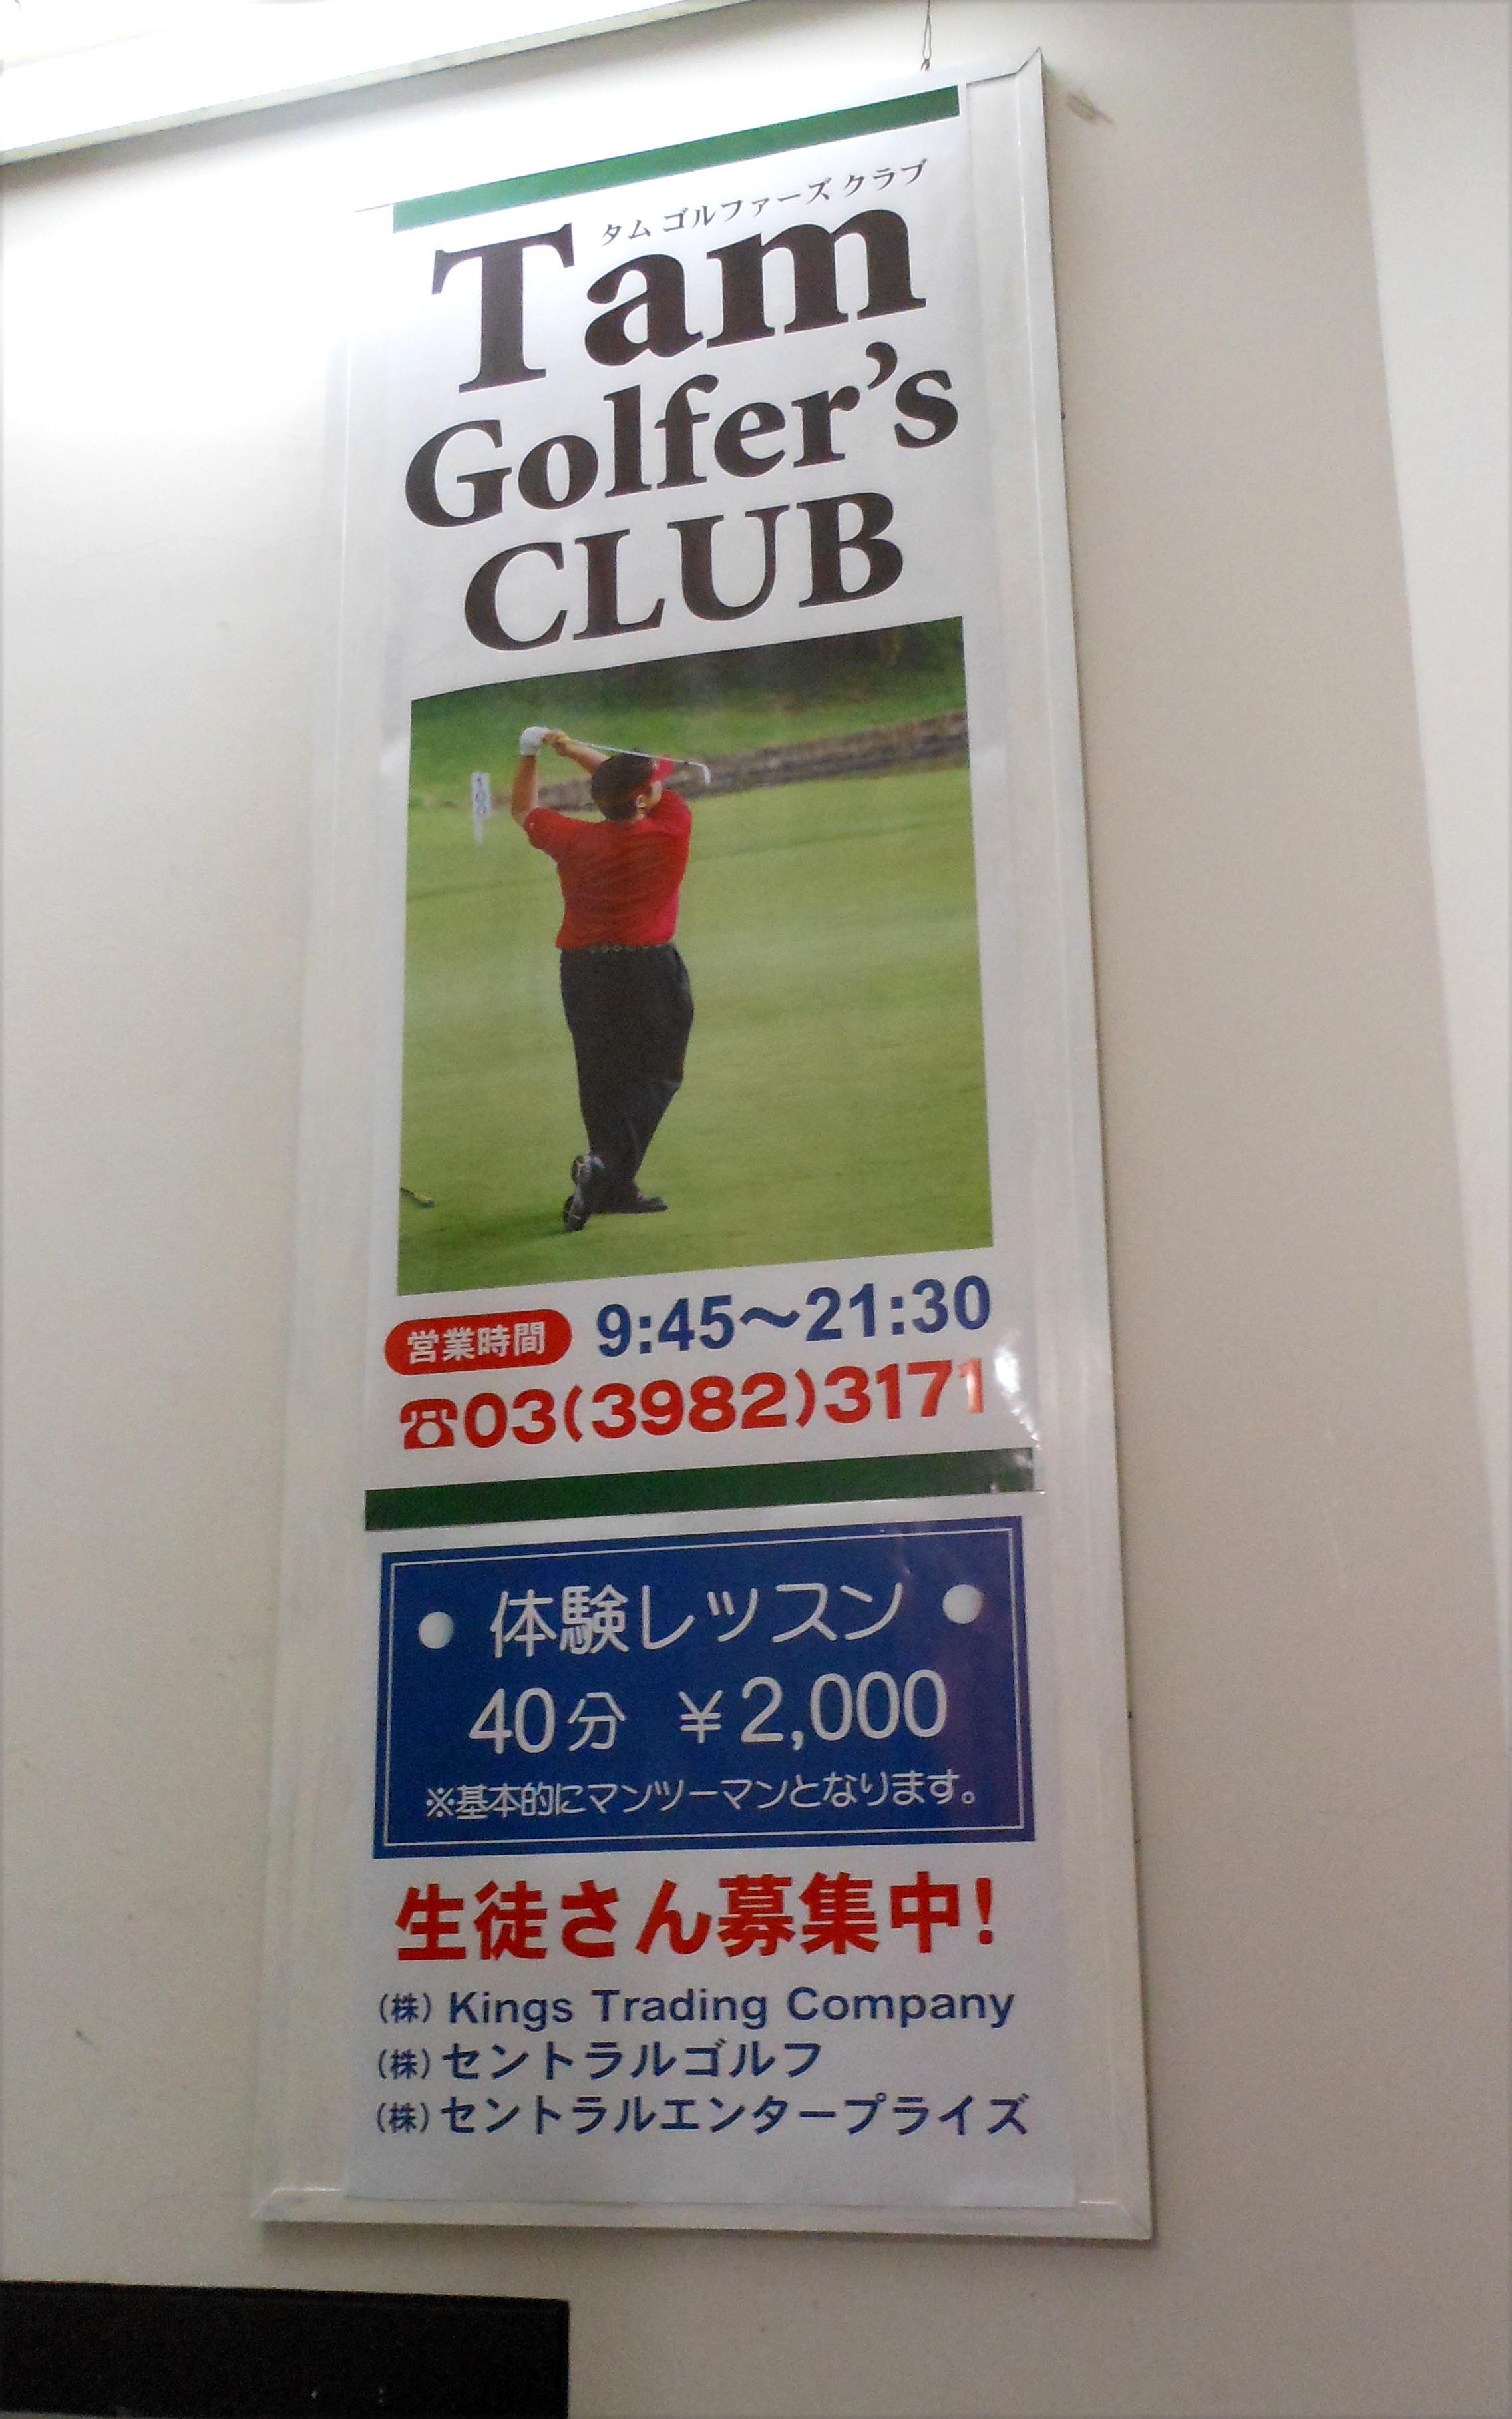 tam golfer's club2.jpg